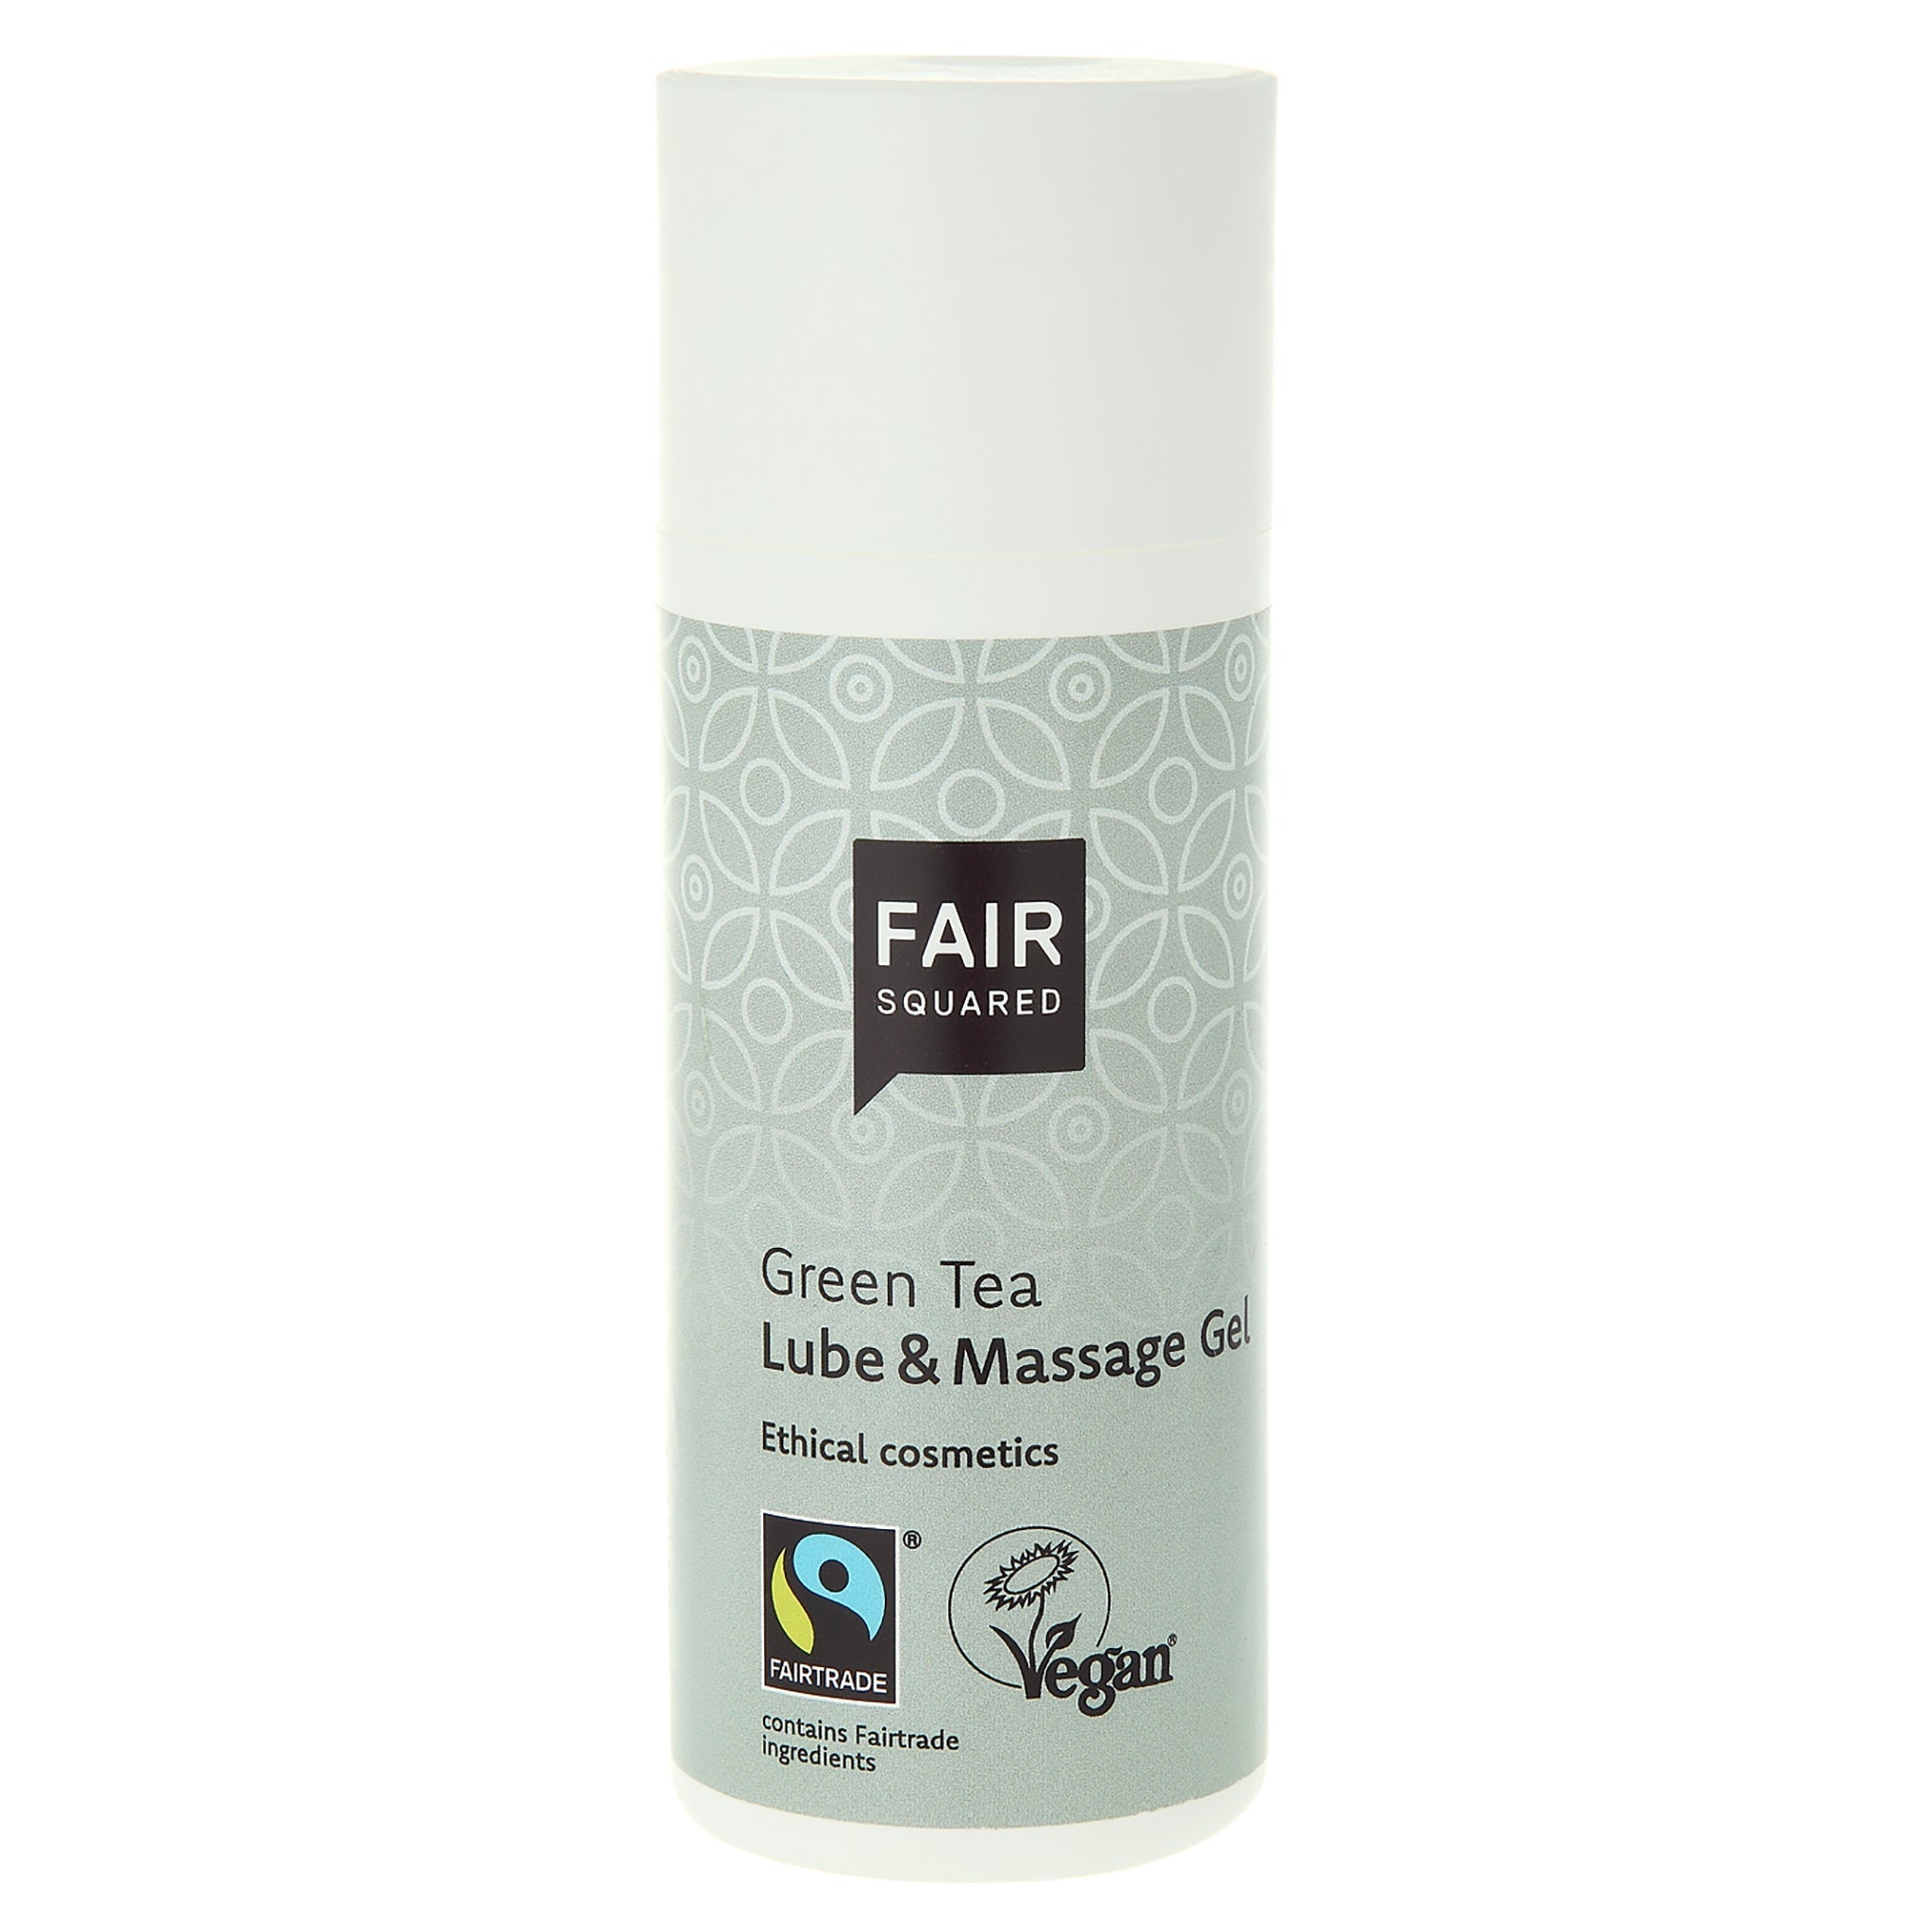 Green Tea Lube and Massage Gel - mypure.co.uk